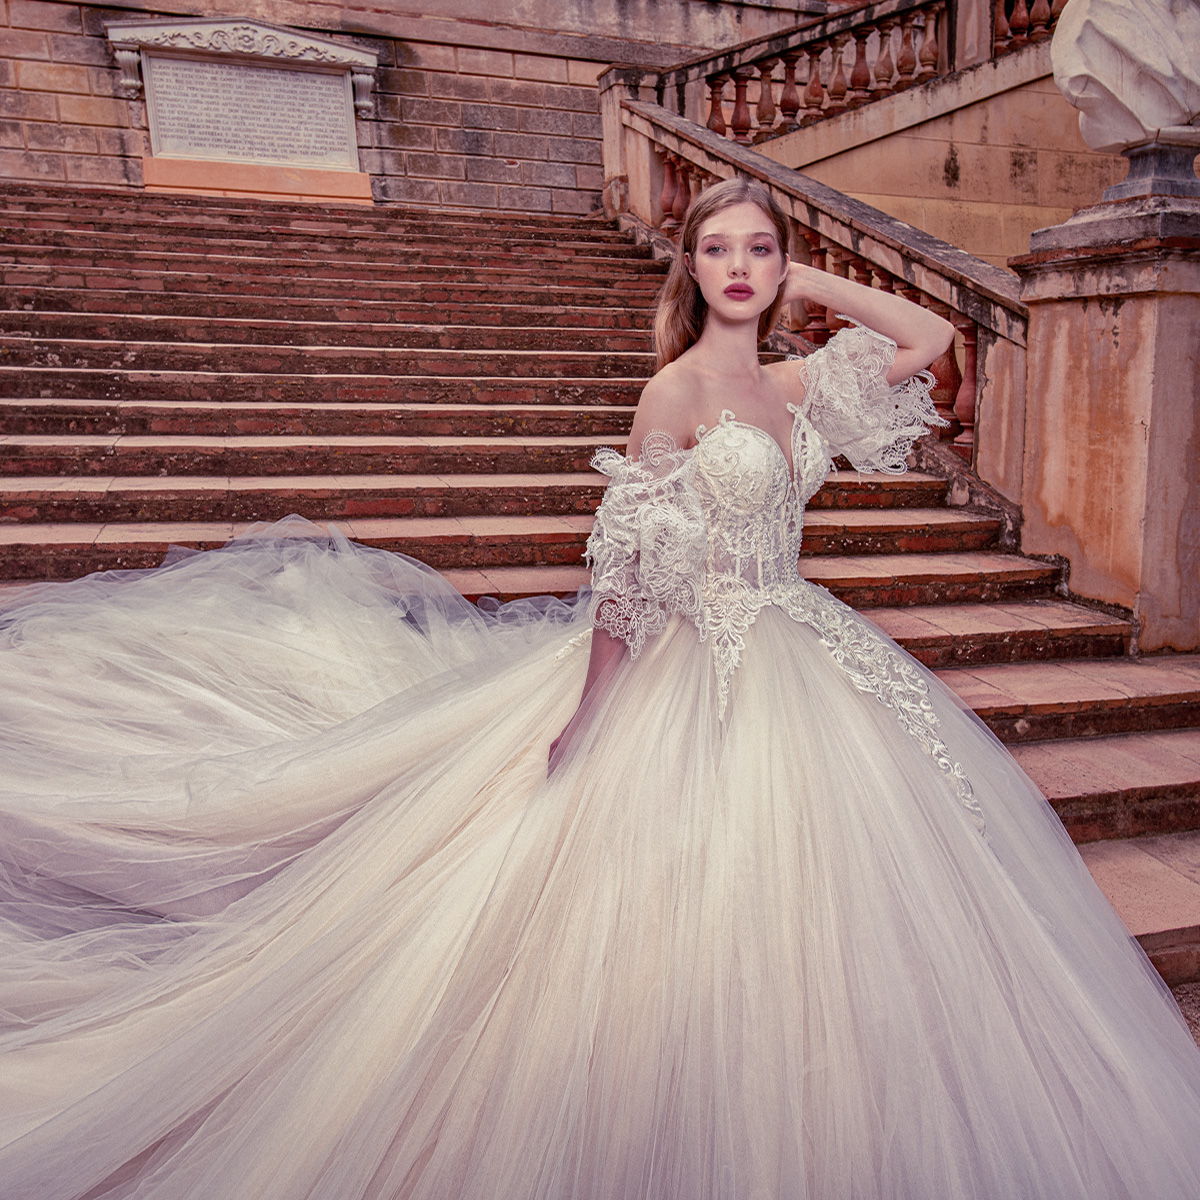 julia kontogruni 2020 bridal wedding inspirasi featured wedding gowns dresses and collection